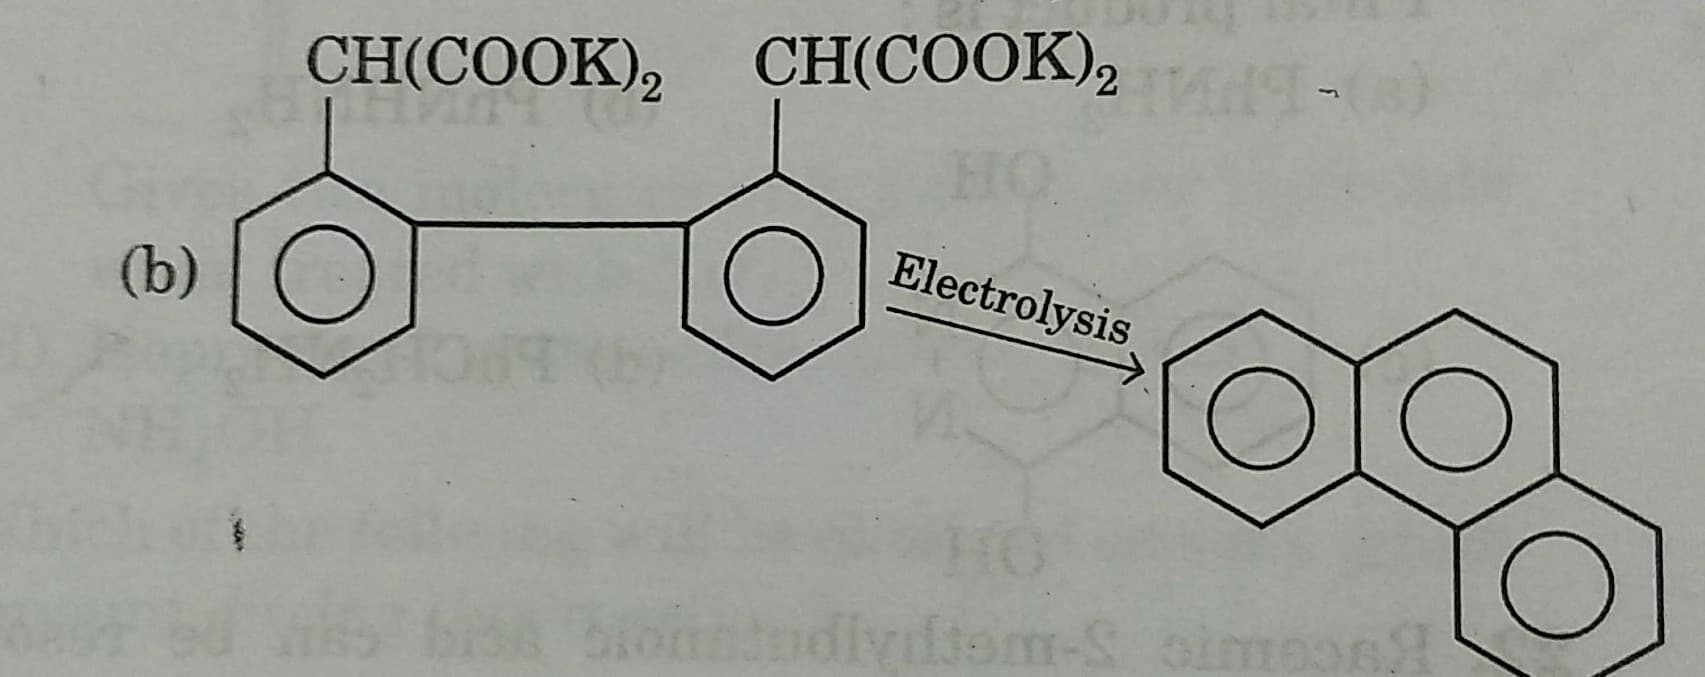 CH(COOK)2
(3)
CH(COOK),
Electrolysis
(b)
odiyidtam-S
